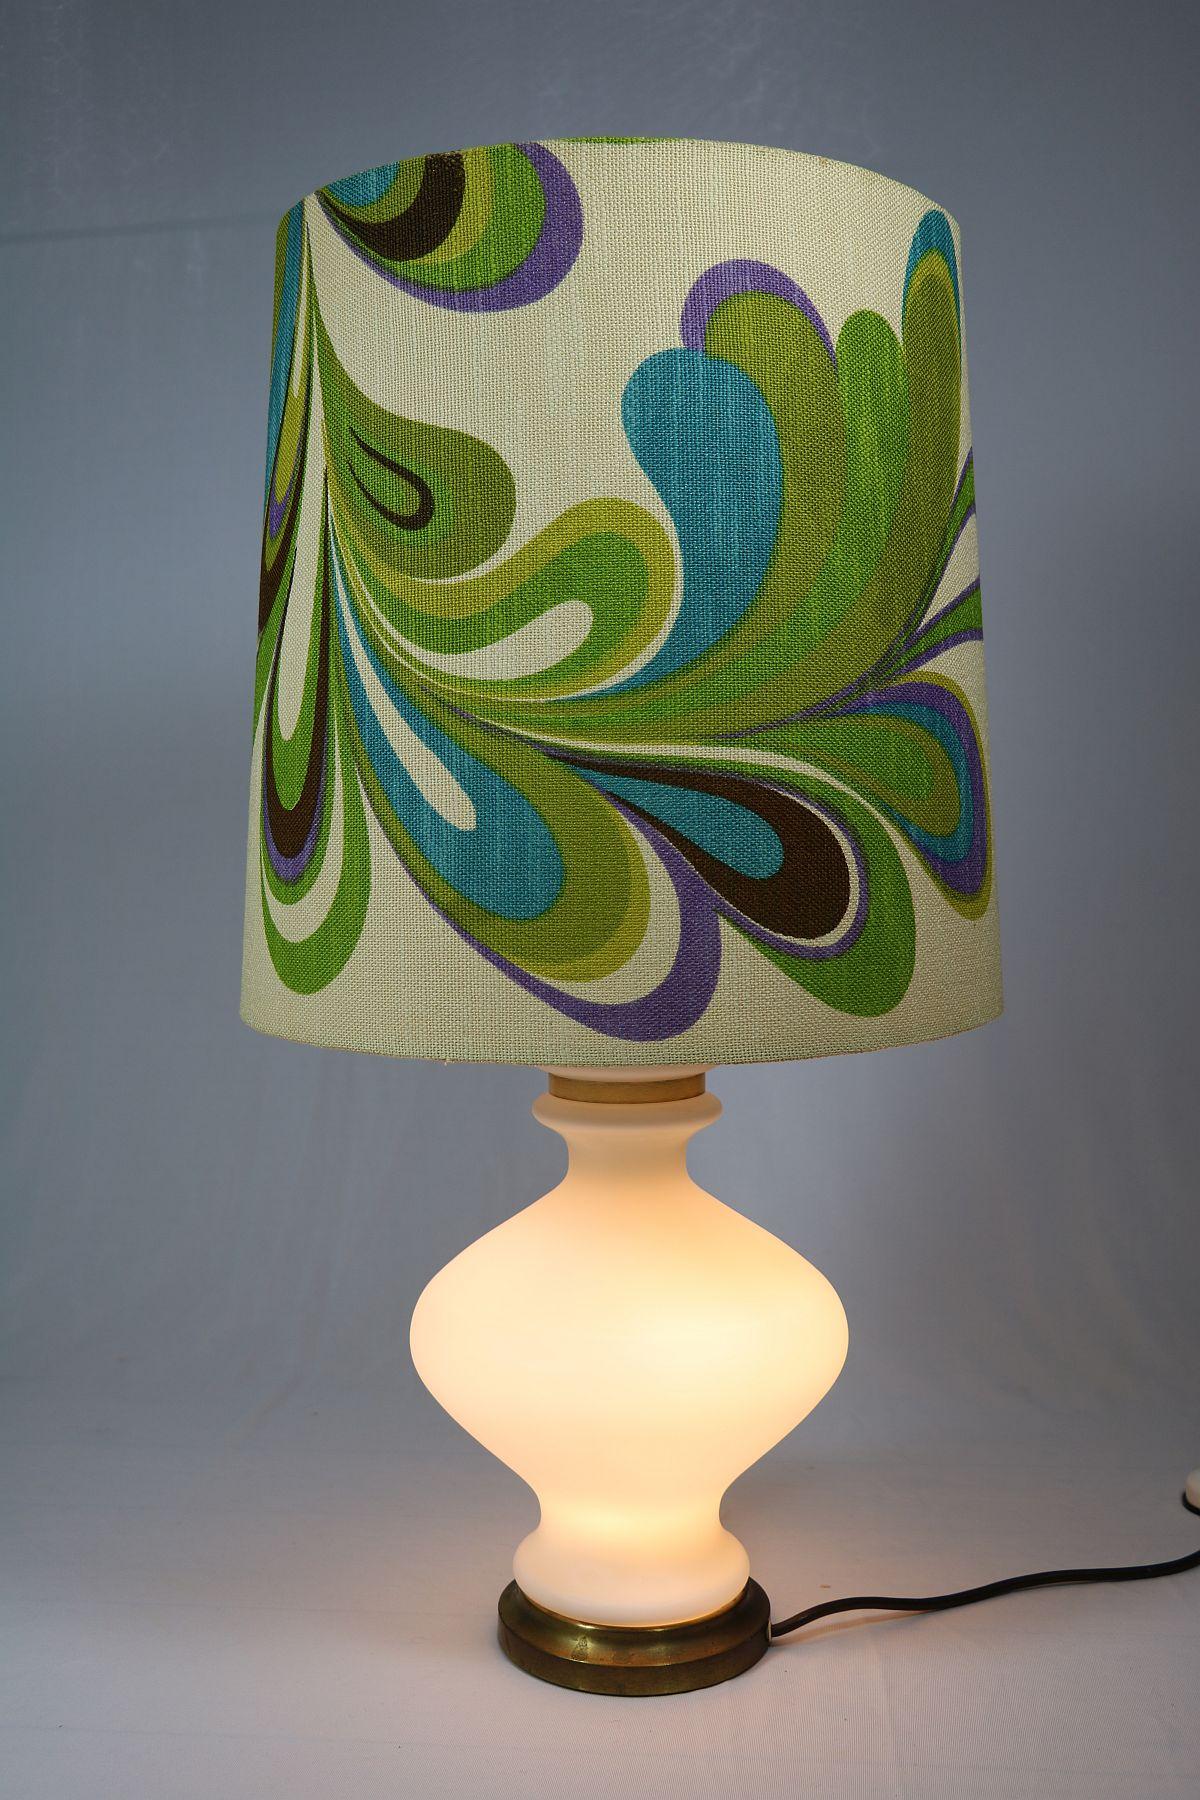 Big Table Lamp, Pop Art, Illuminated Base, Original Midcentury, 1960s 1970s 1